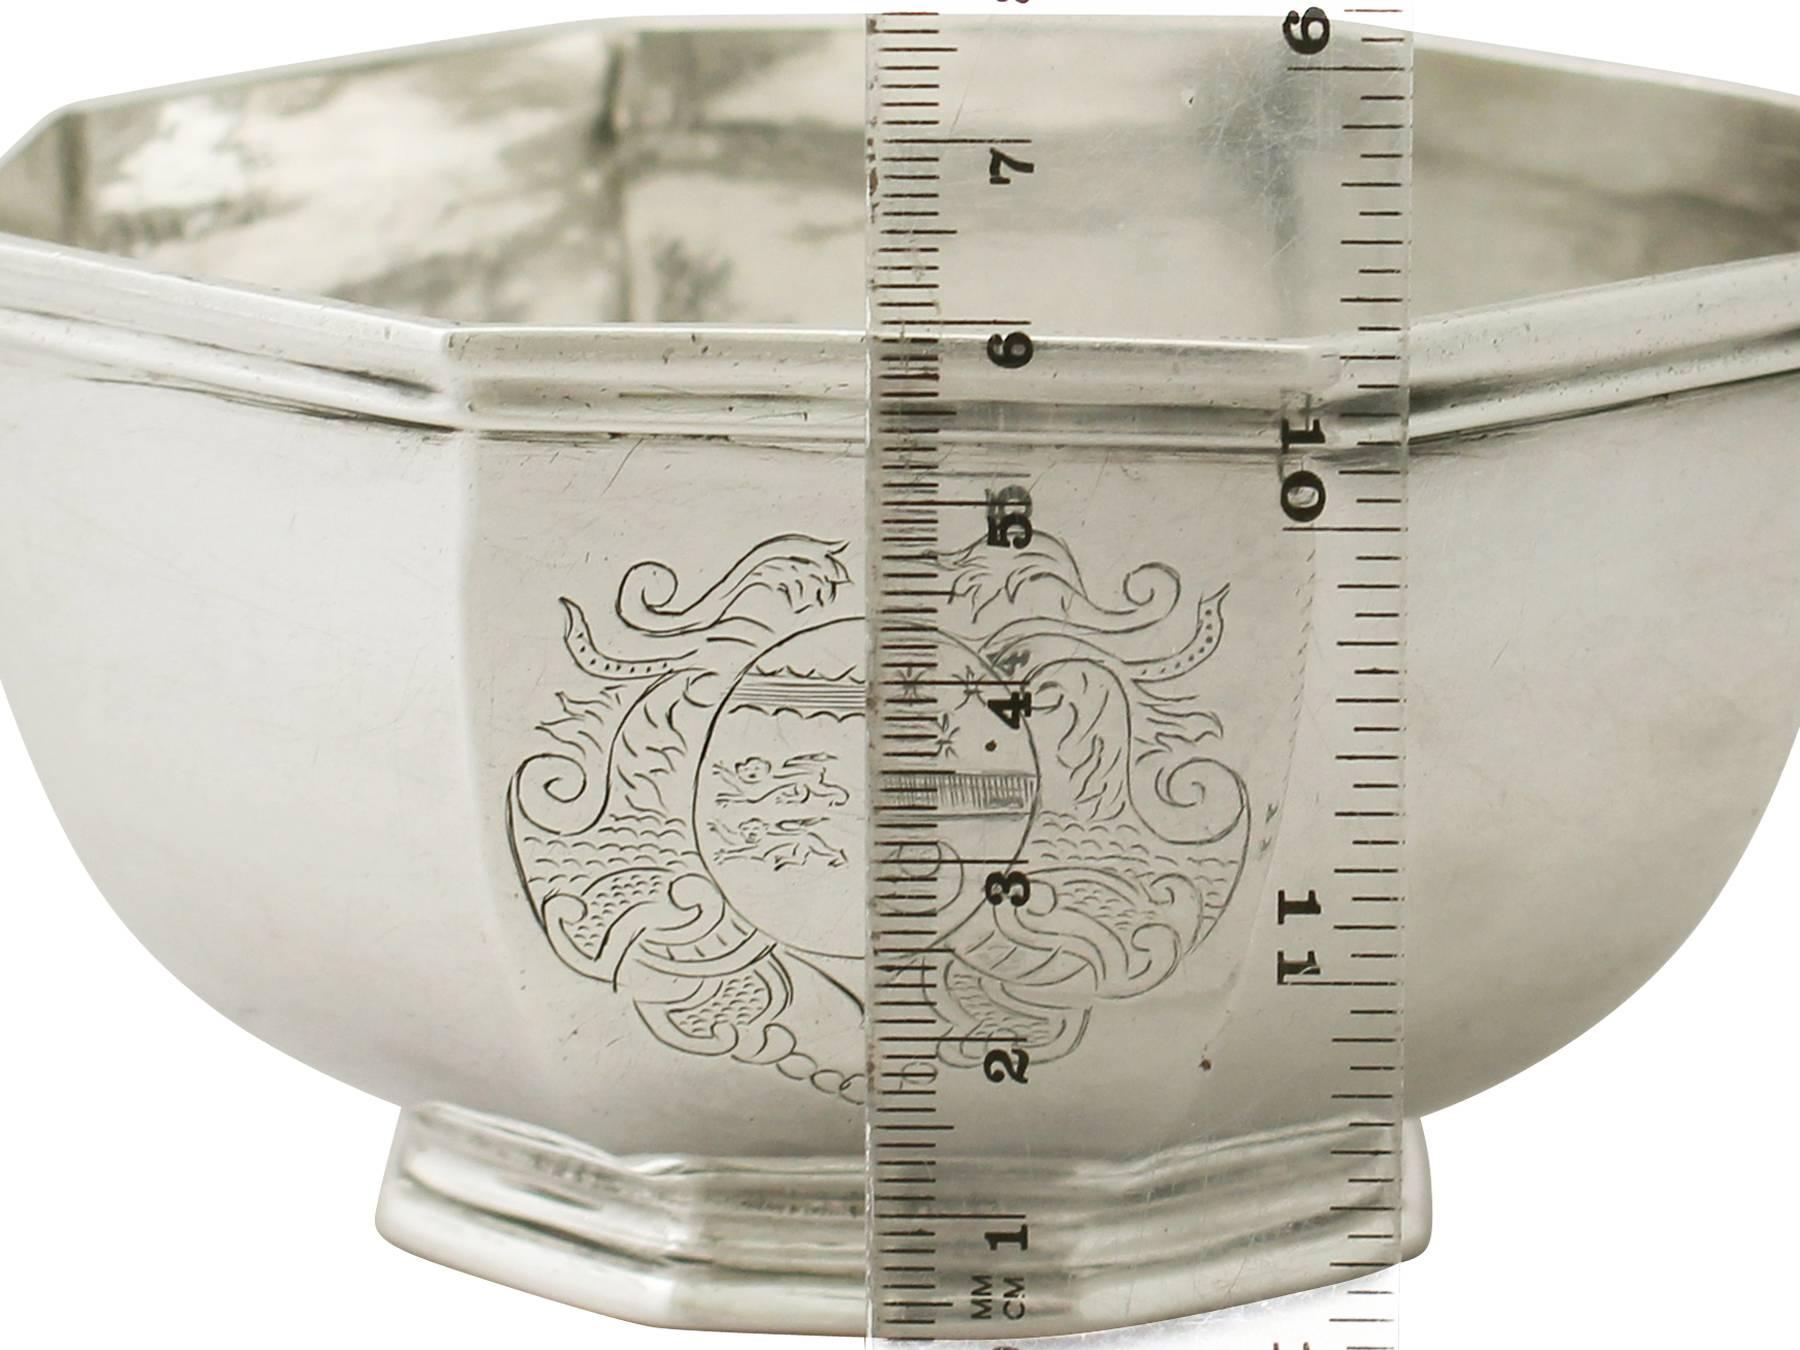 Britannia Standard Silver Bowl/Centerpiece by James Rood - Antique Queen Anne 4